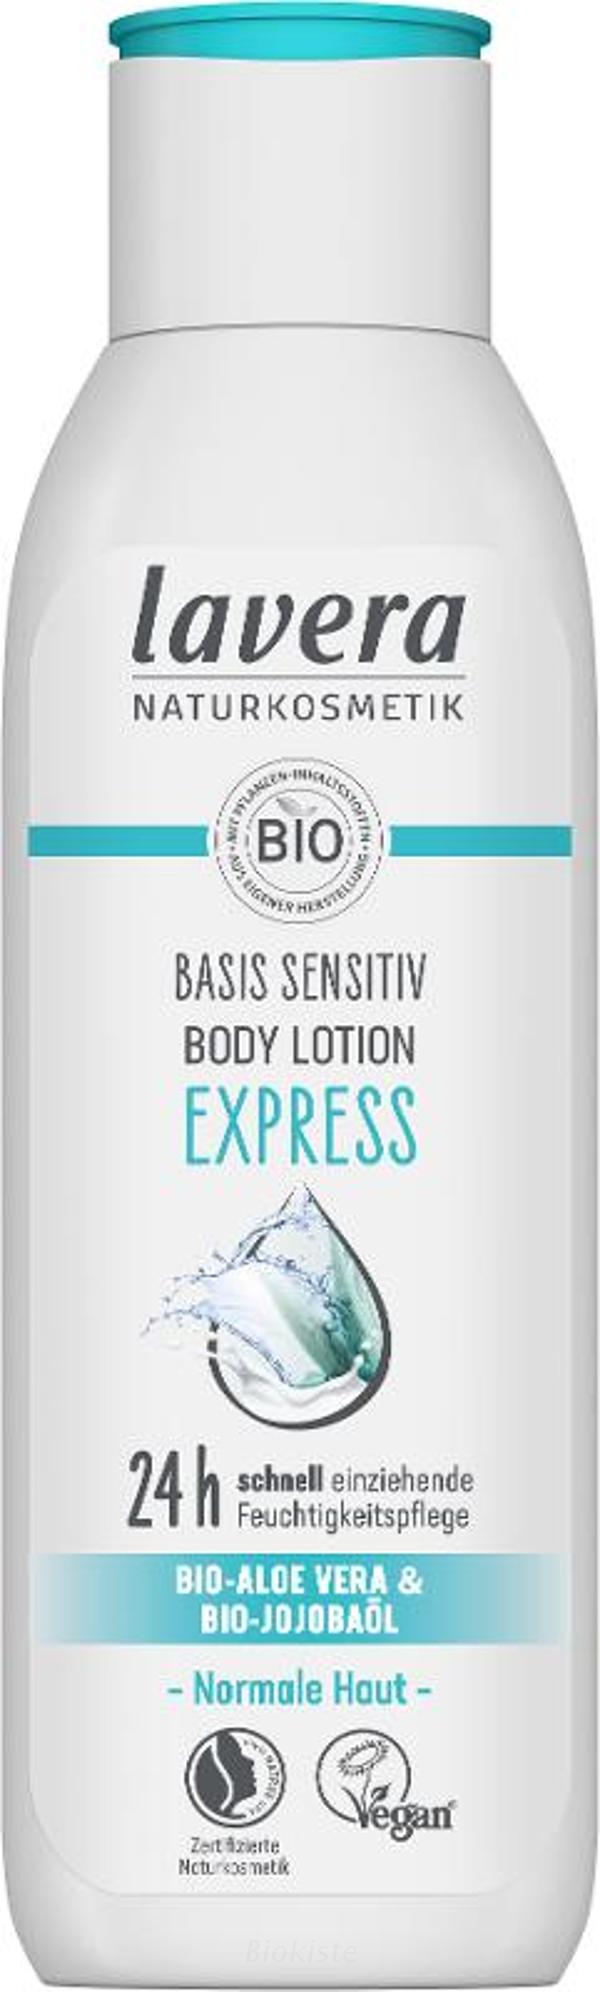 Produktfoto zu basis Sensitiv Bodylotion Express 250 ml